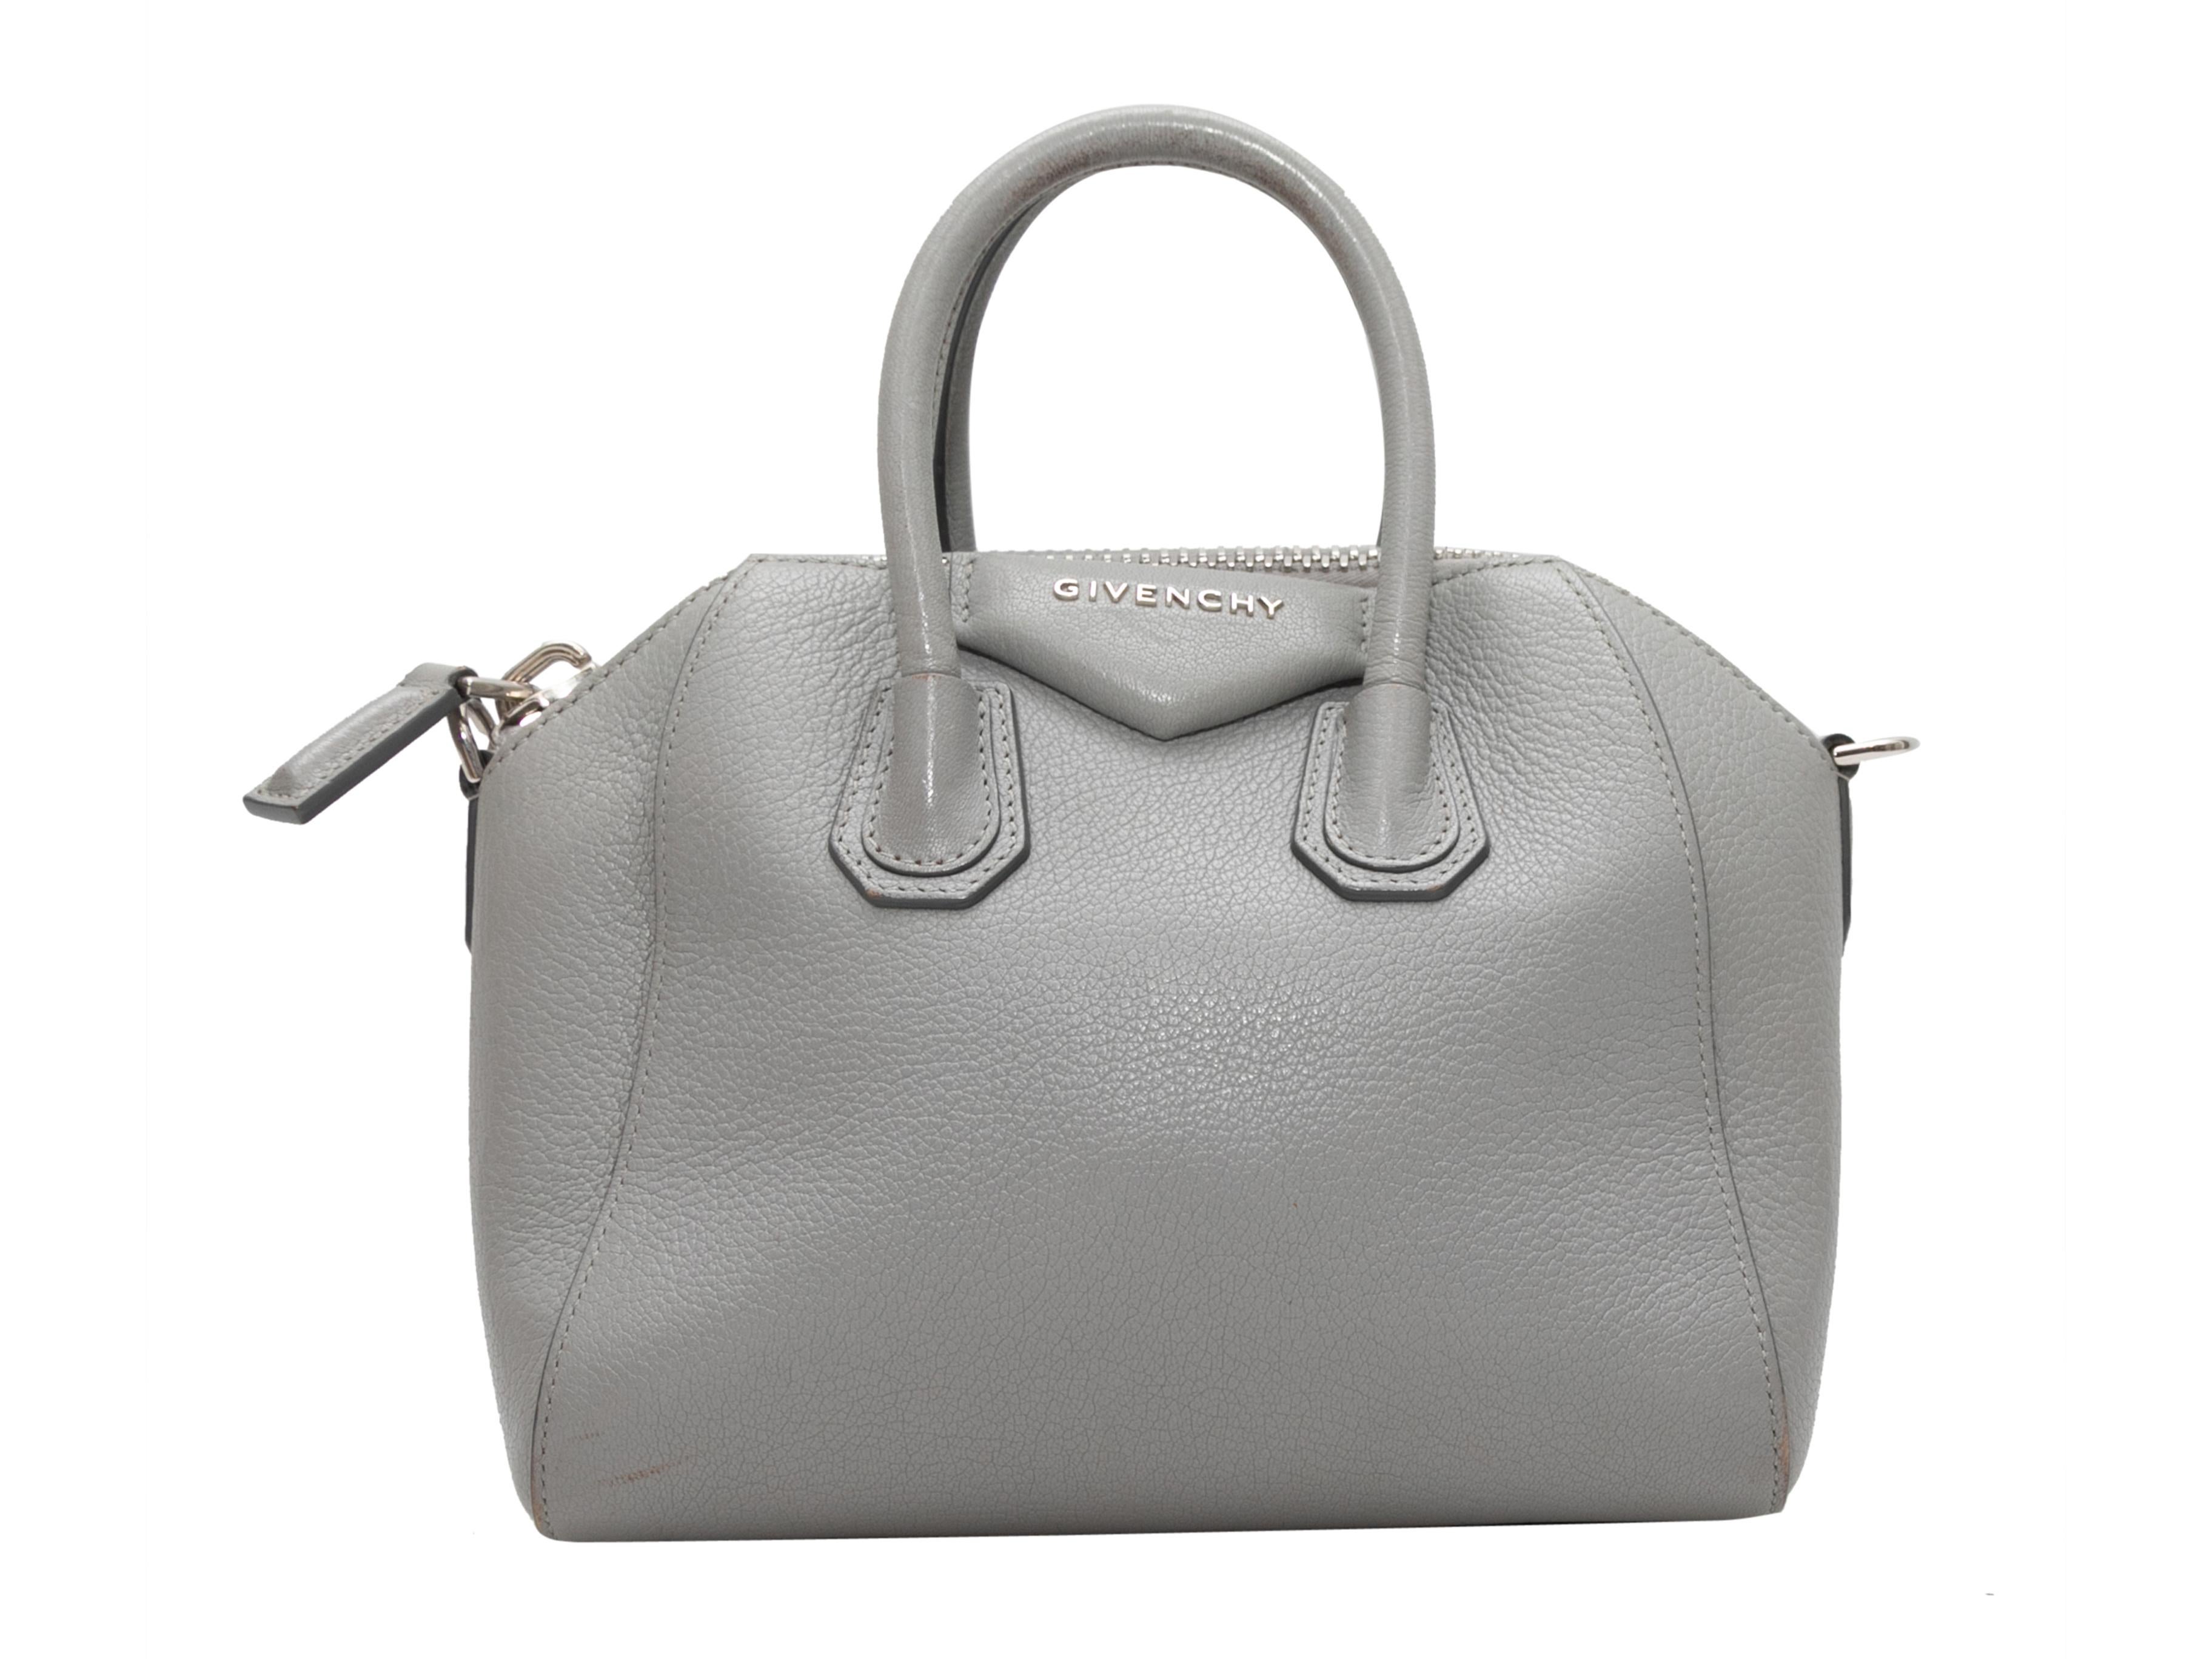 Grey Givechy Mini Antigona Handbag. The Mini Antigona Handbag features a leather body, silver-tone hardware, dual rolled top handles, a single flat shoulder strap, and a top zip closure. 11